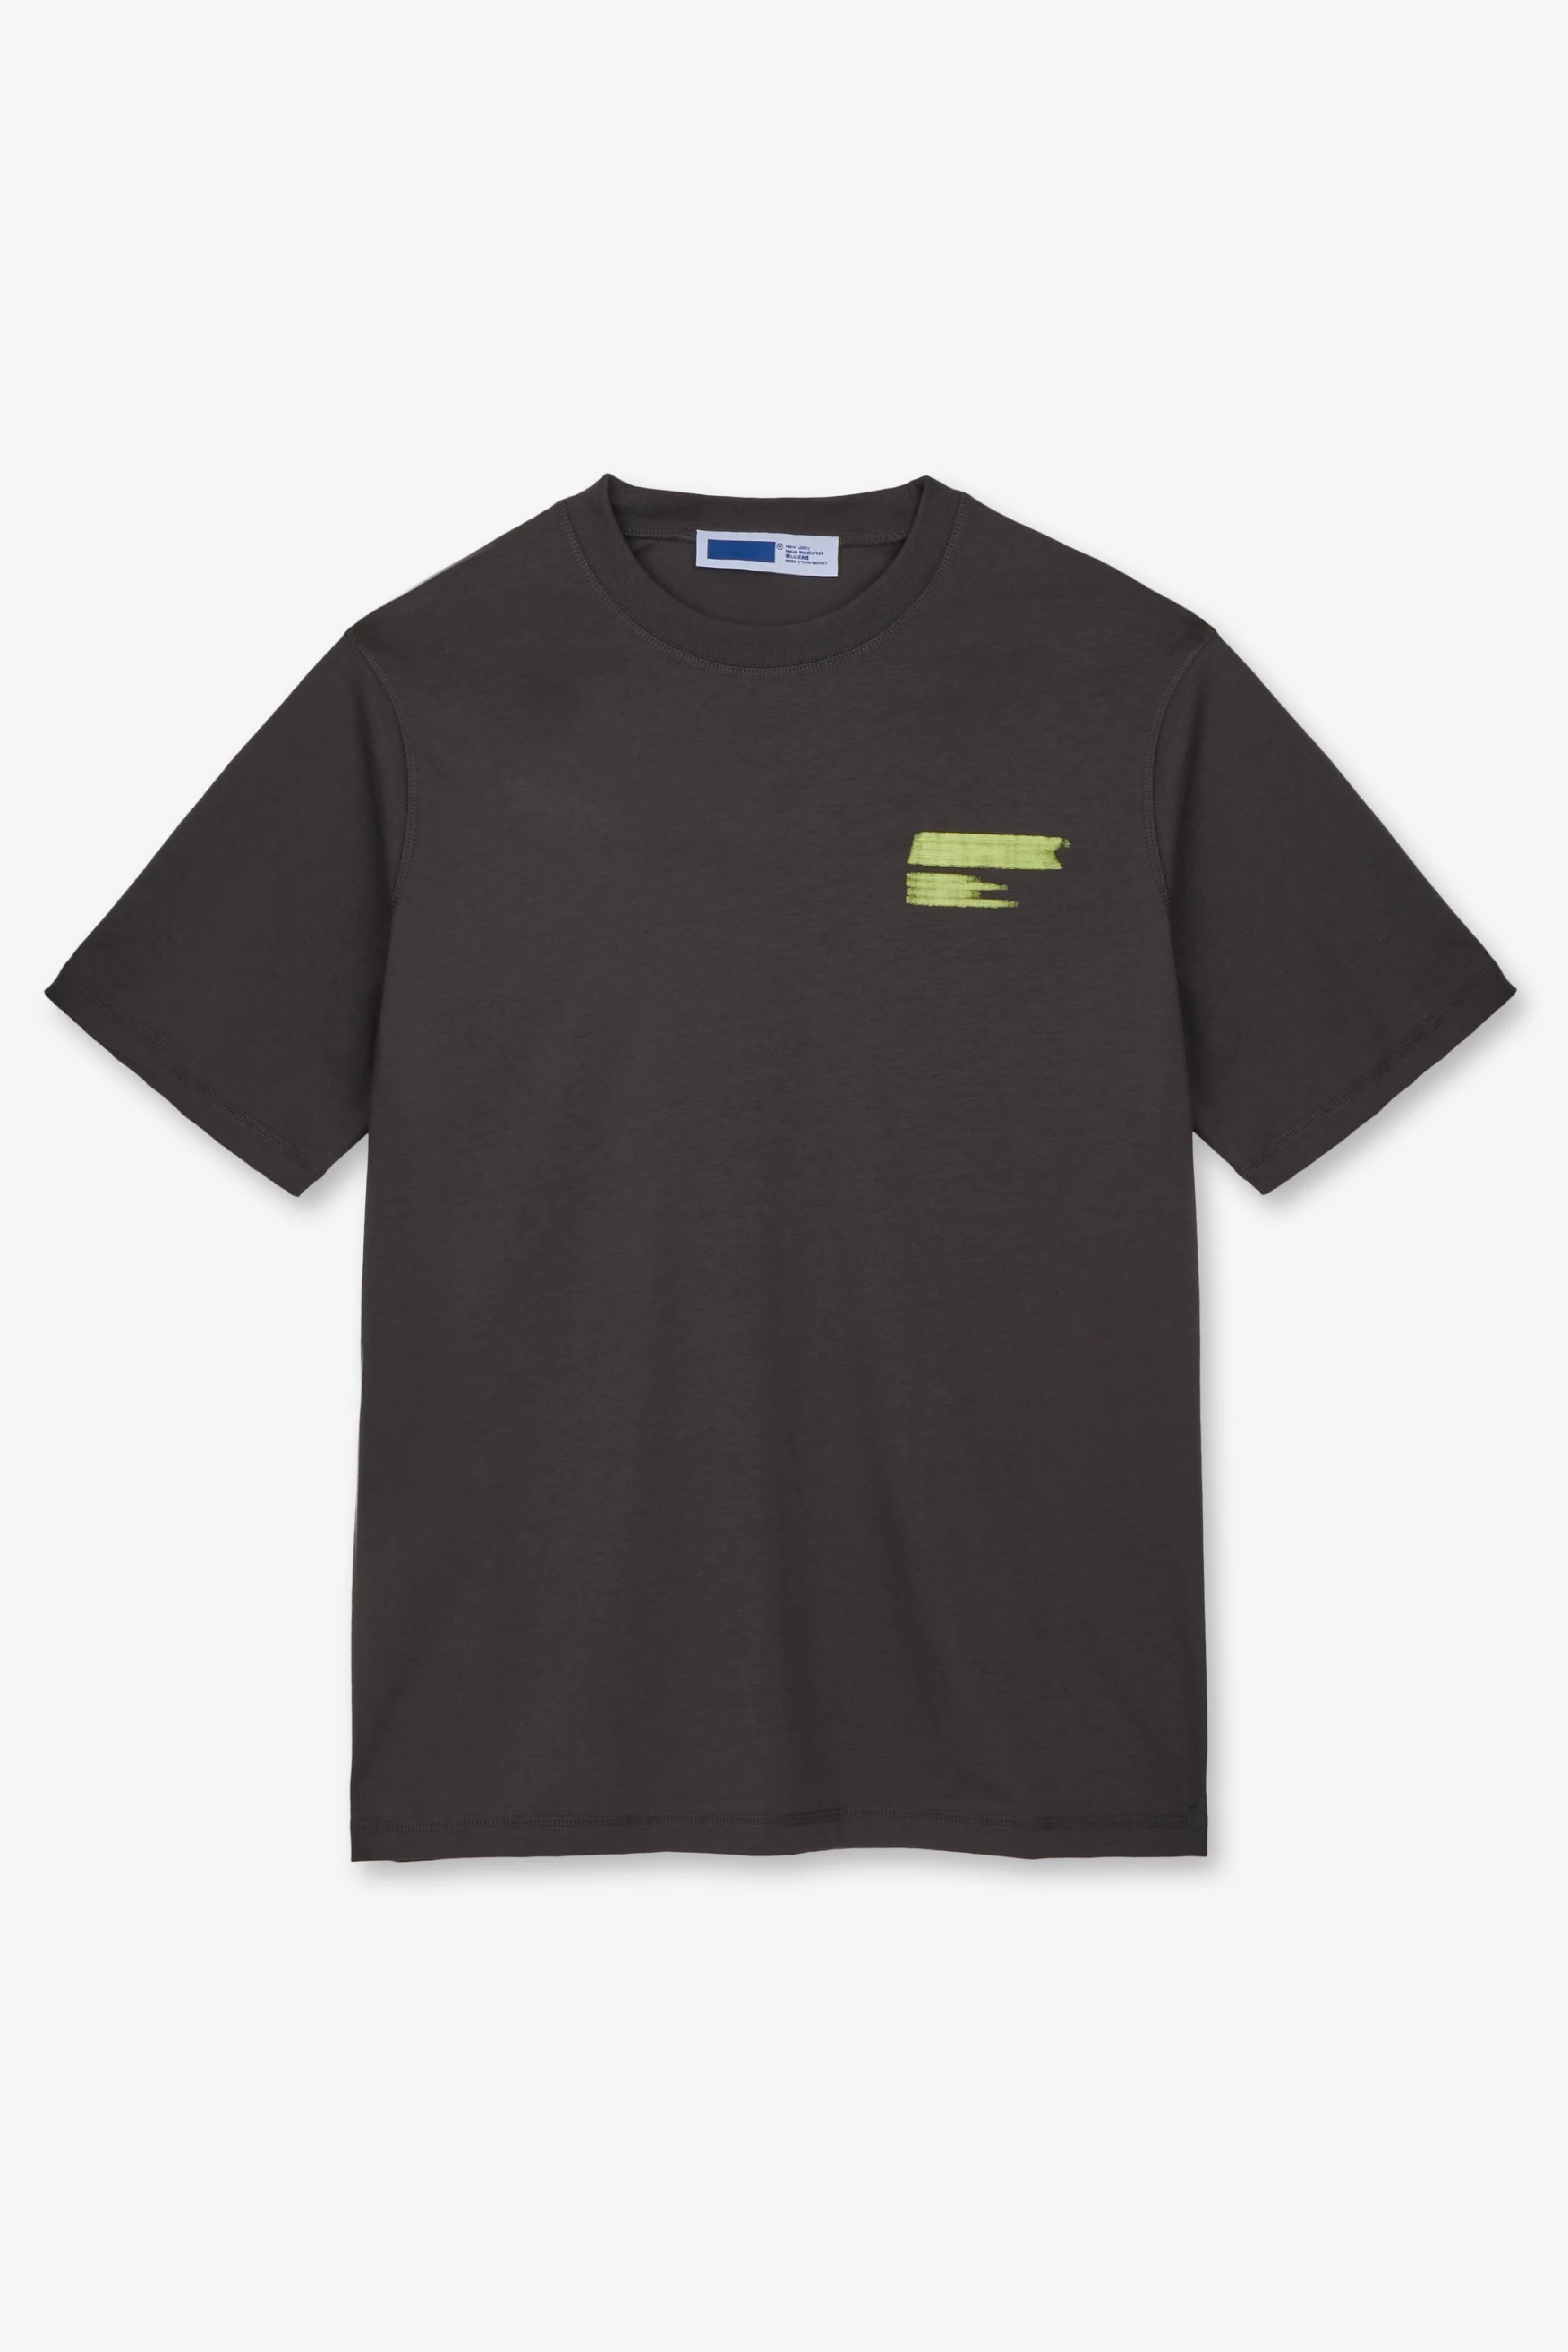 Selectshop FRAME - AFFIX Reverb Standardised Logo Tee T-Shirts Dubai